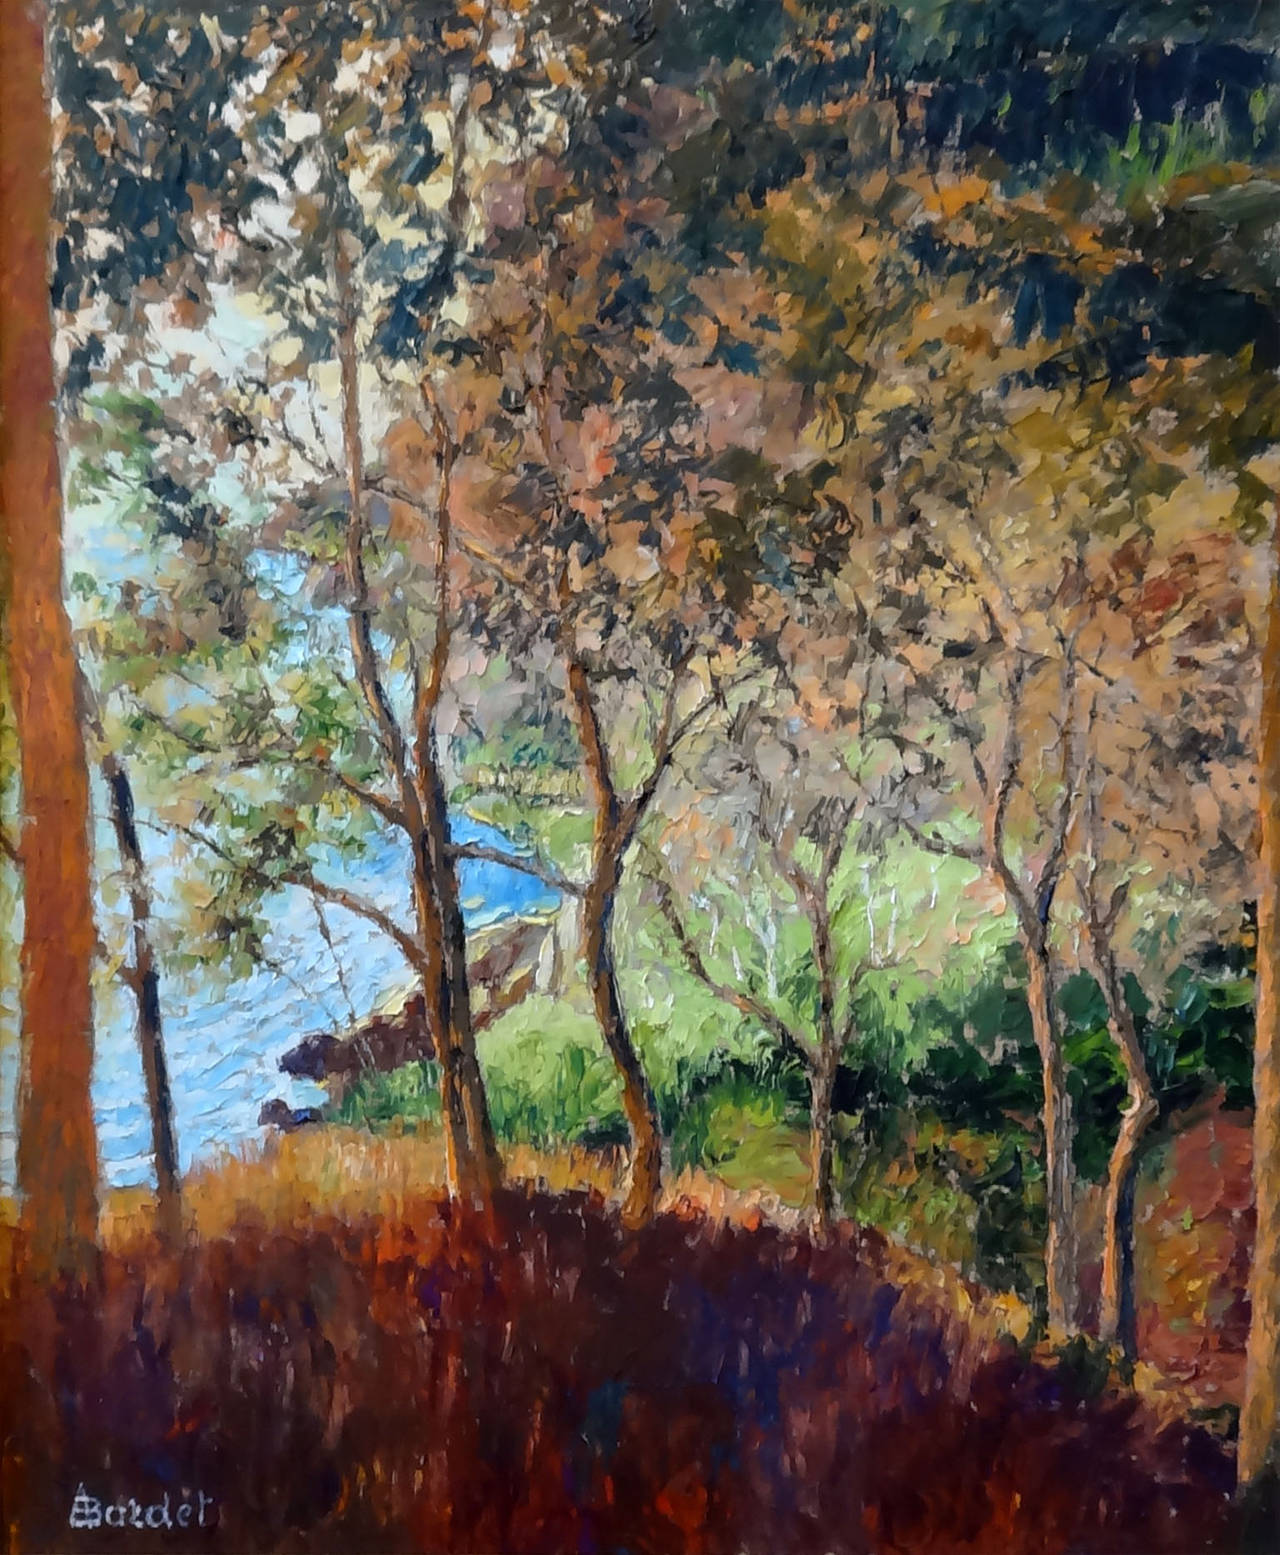 Andre Bardet Landscape Painting - The Trees of the Seaside (Les Arbres du Bord de Mer)